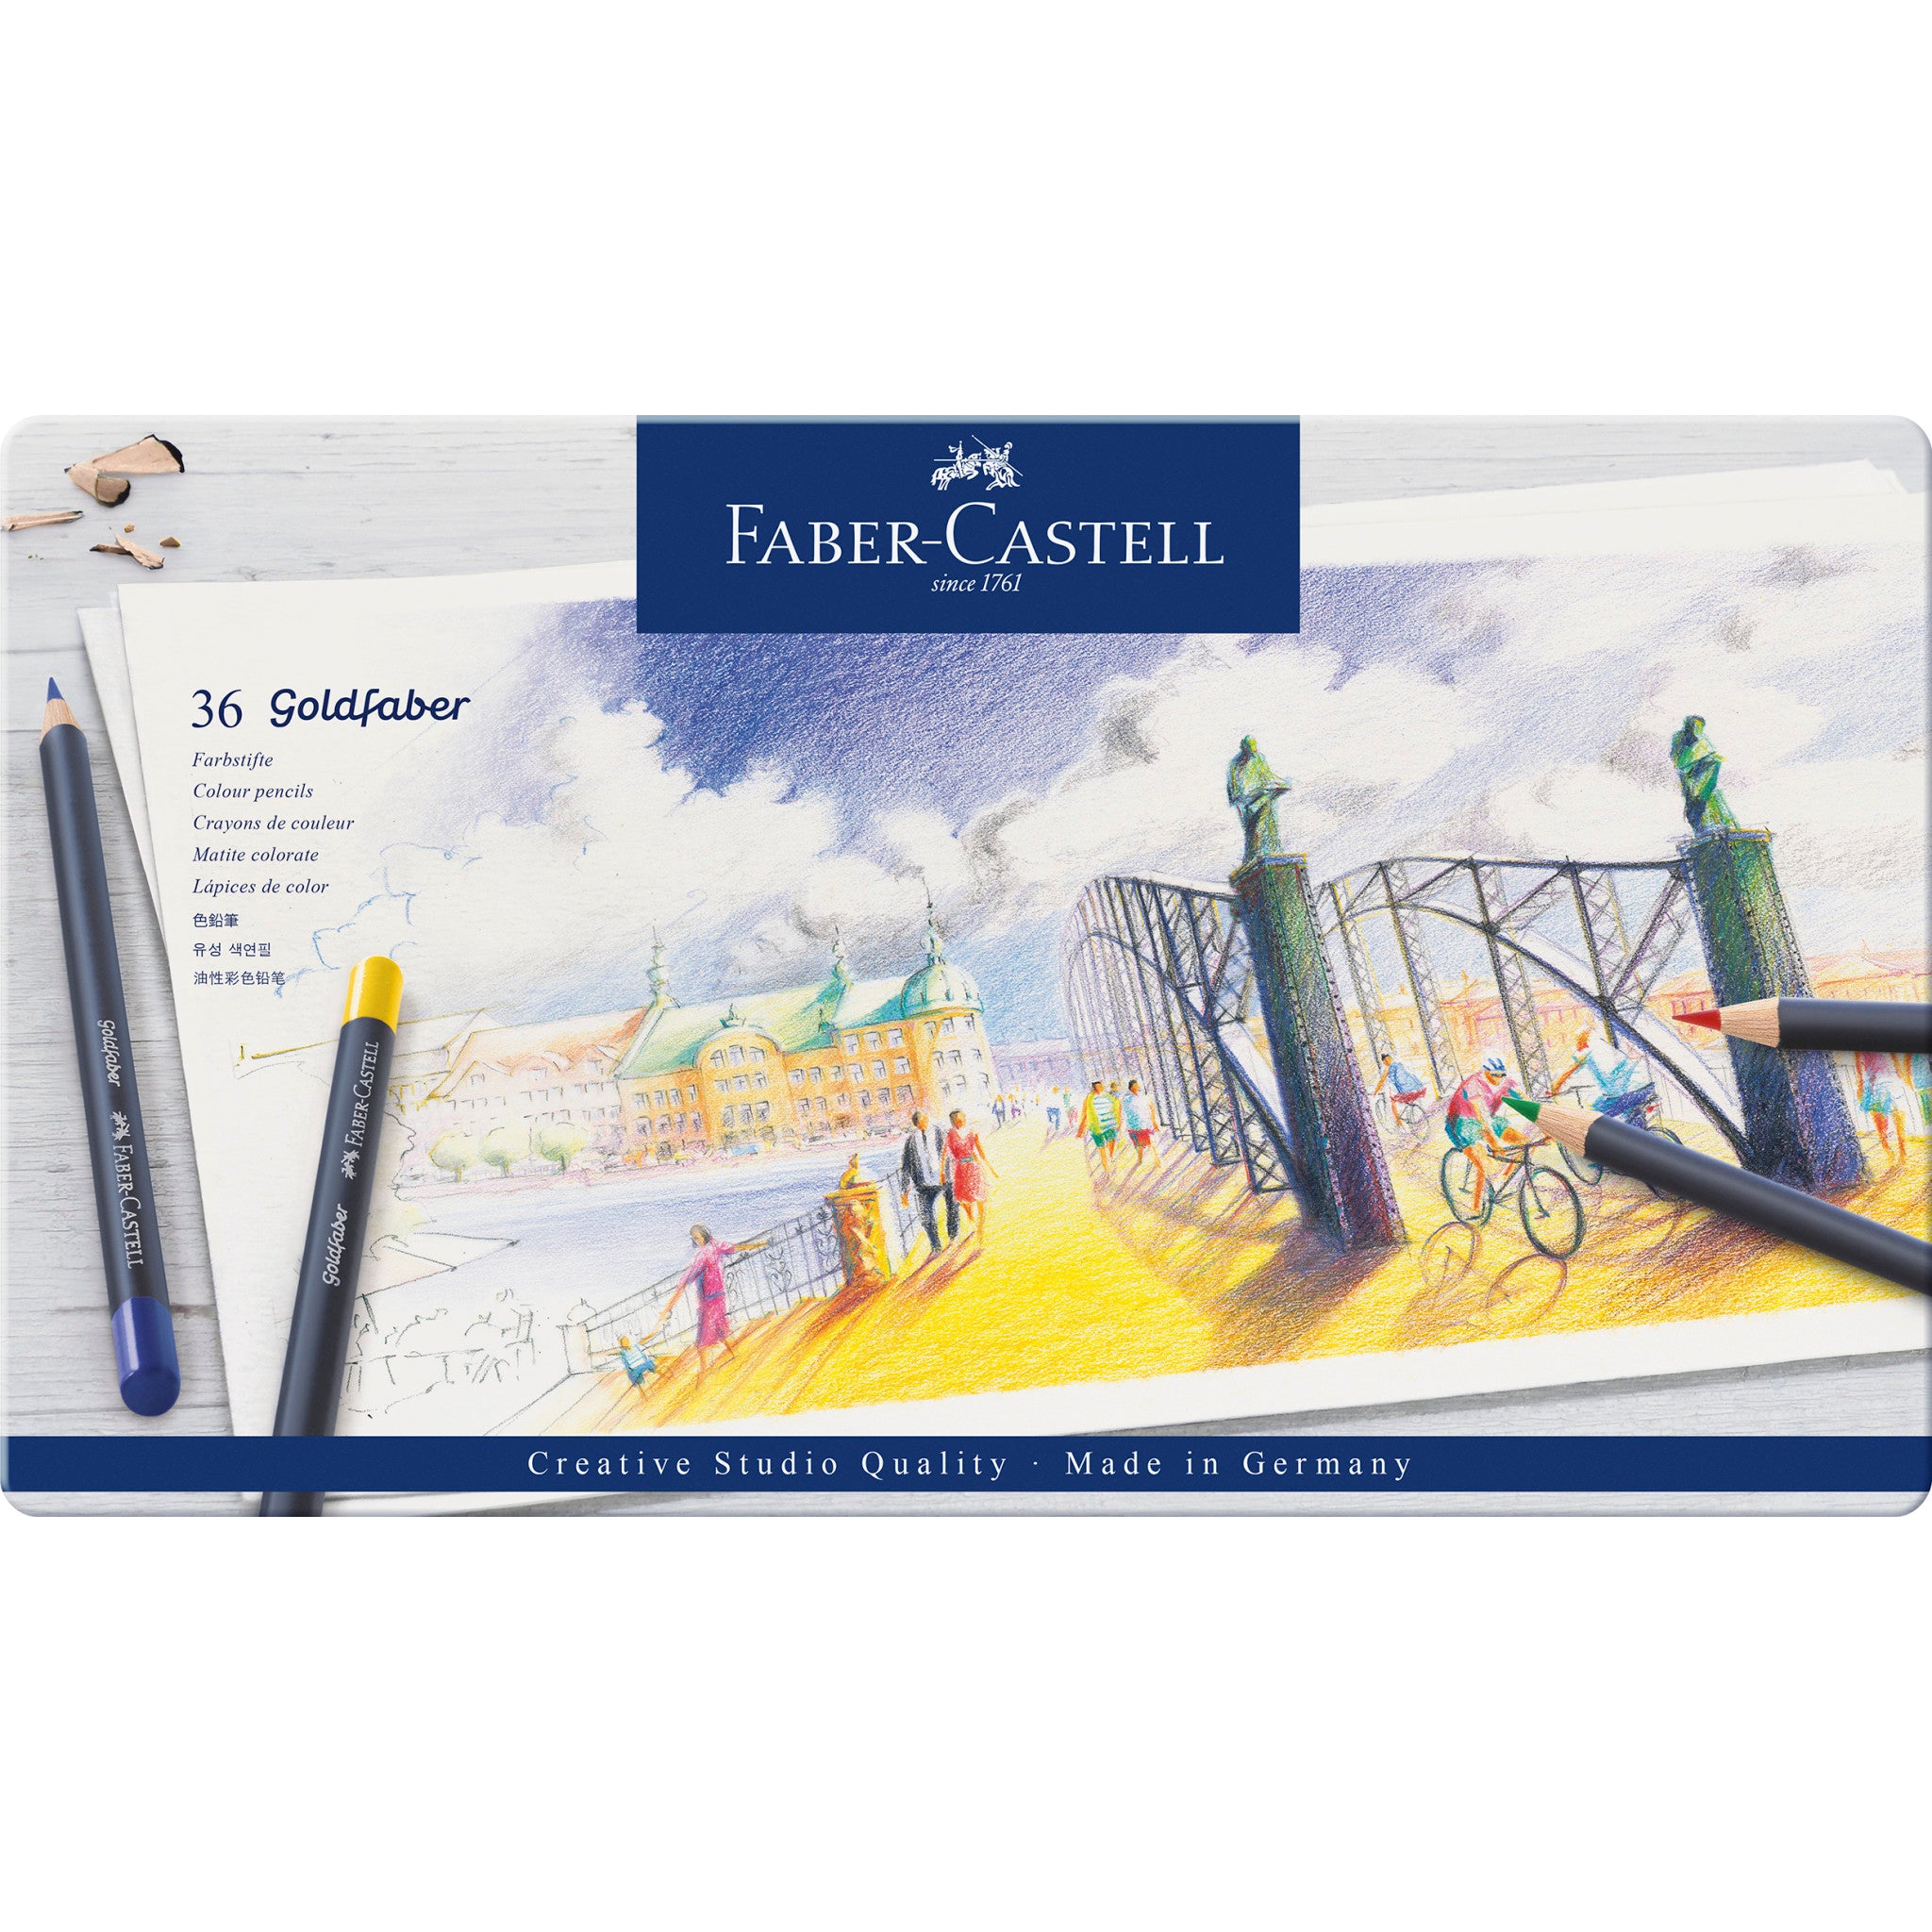 Faber Castell Classic 100 Colour Pencils Tin – Creative Kids